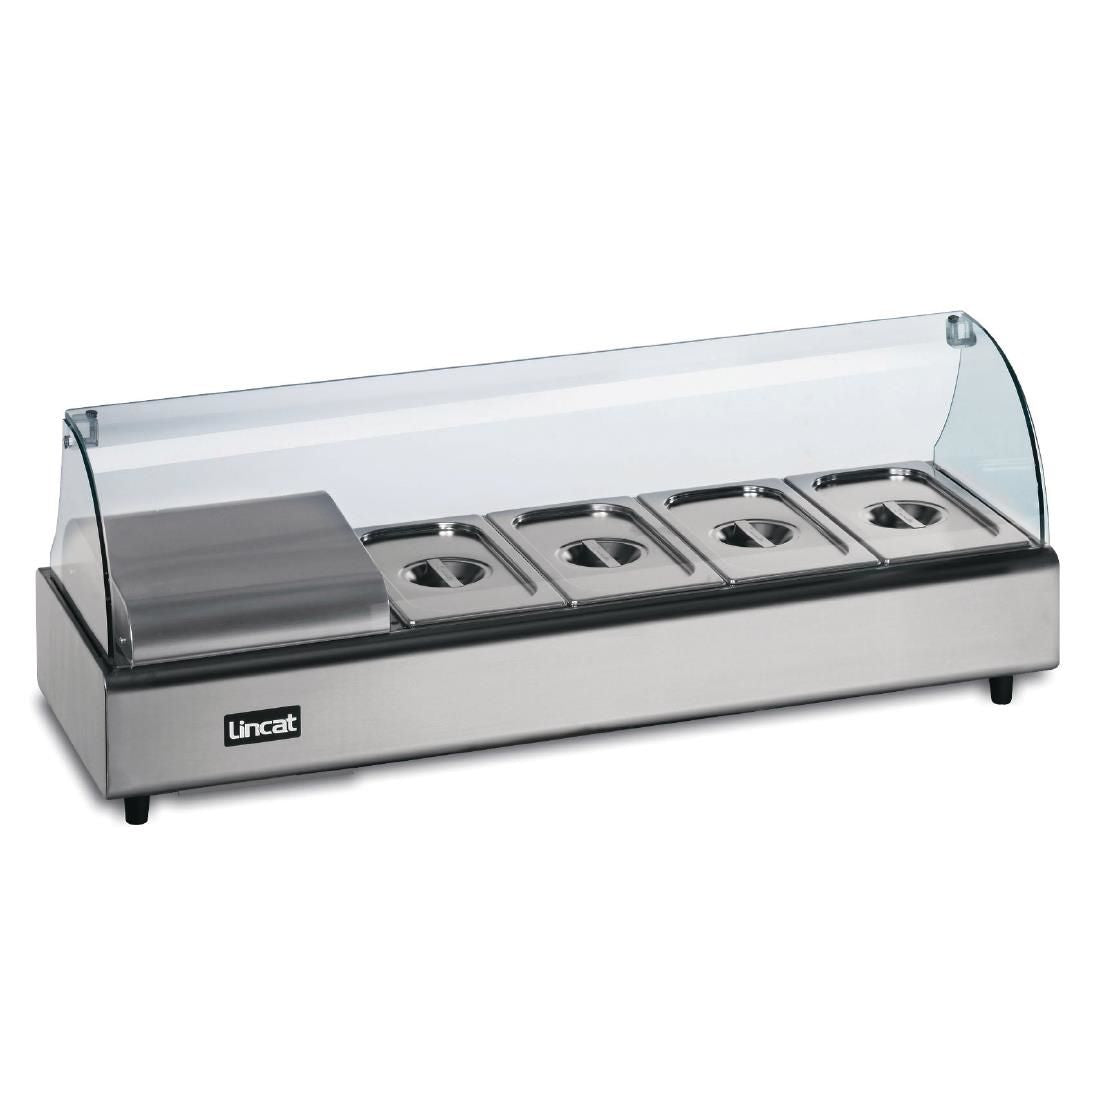 FDB4 - Lincat Seal Counter-top Food Display Bar - Refrigerated - W 1045 mm - 0.175 kW JD Catering Equipment Solutions Ltd